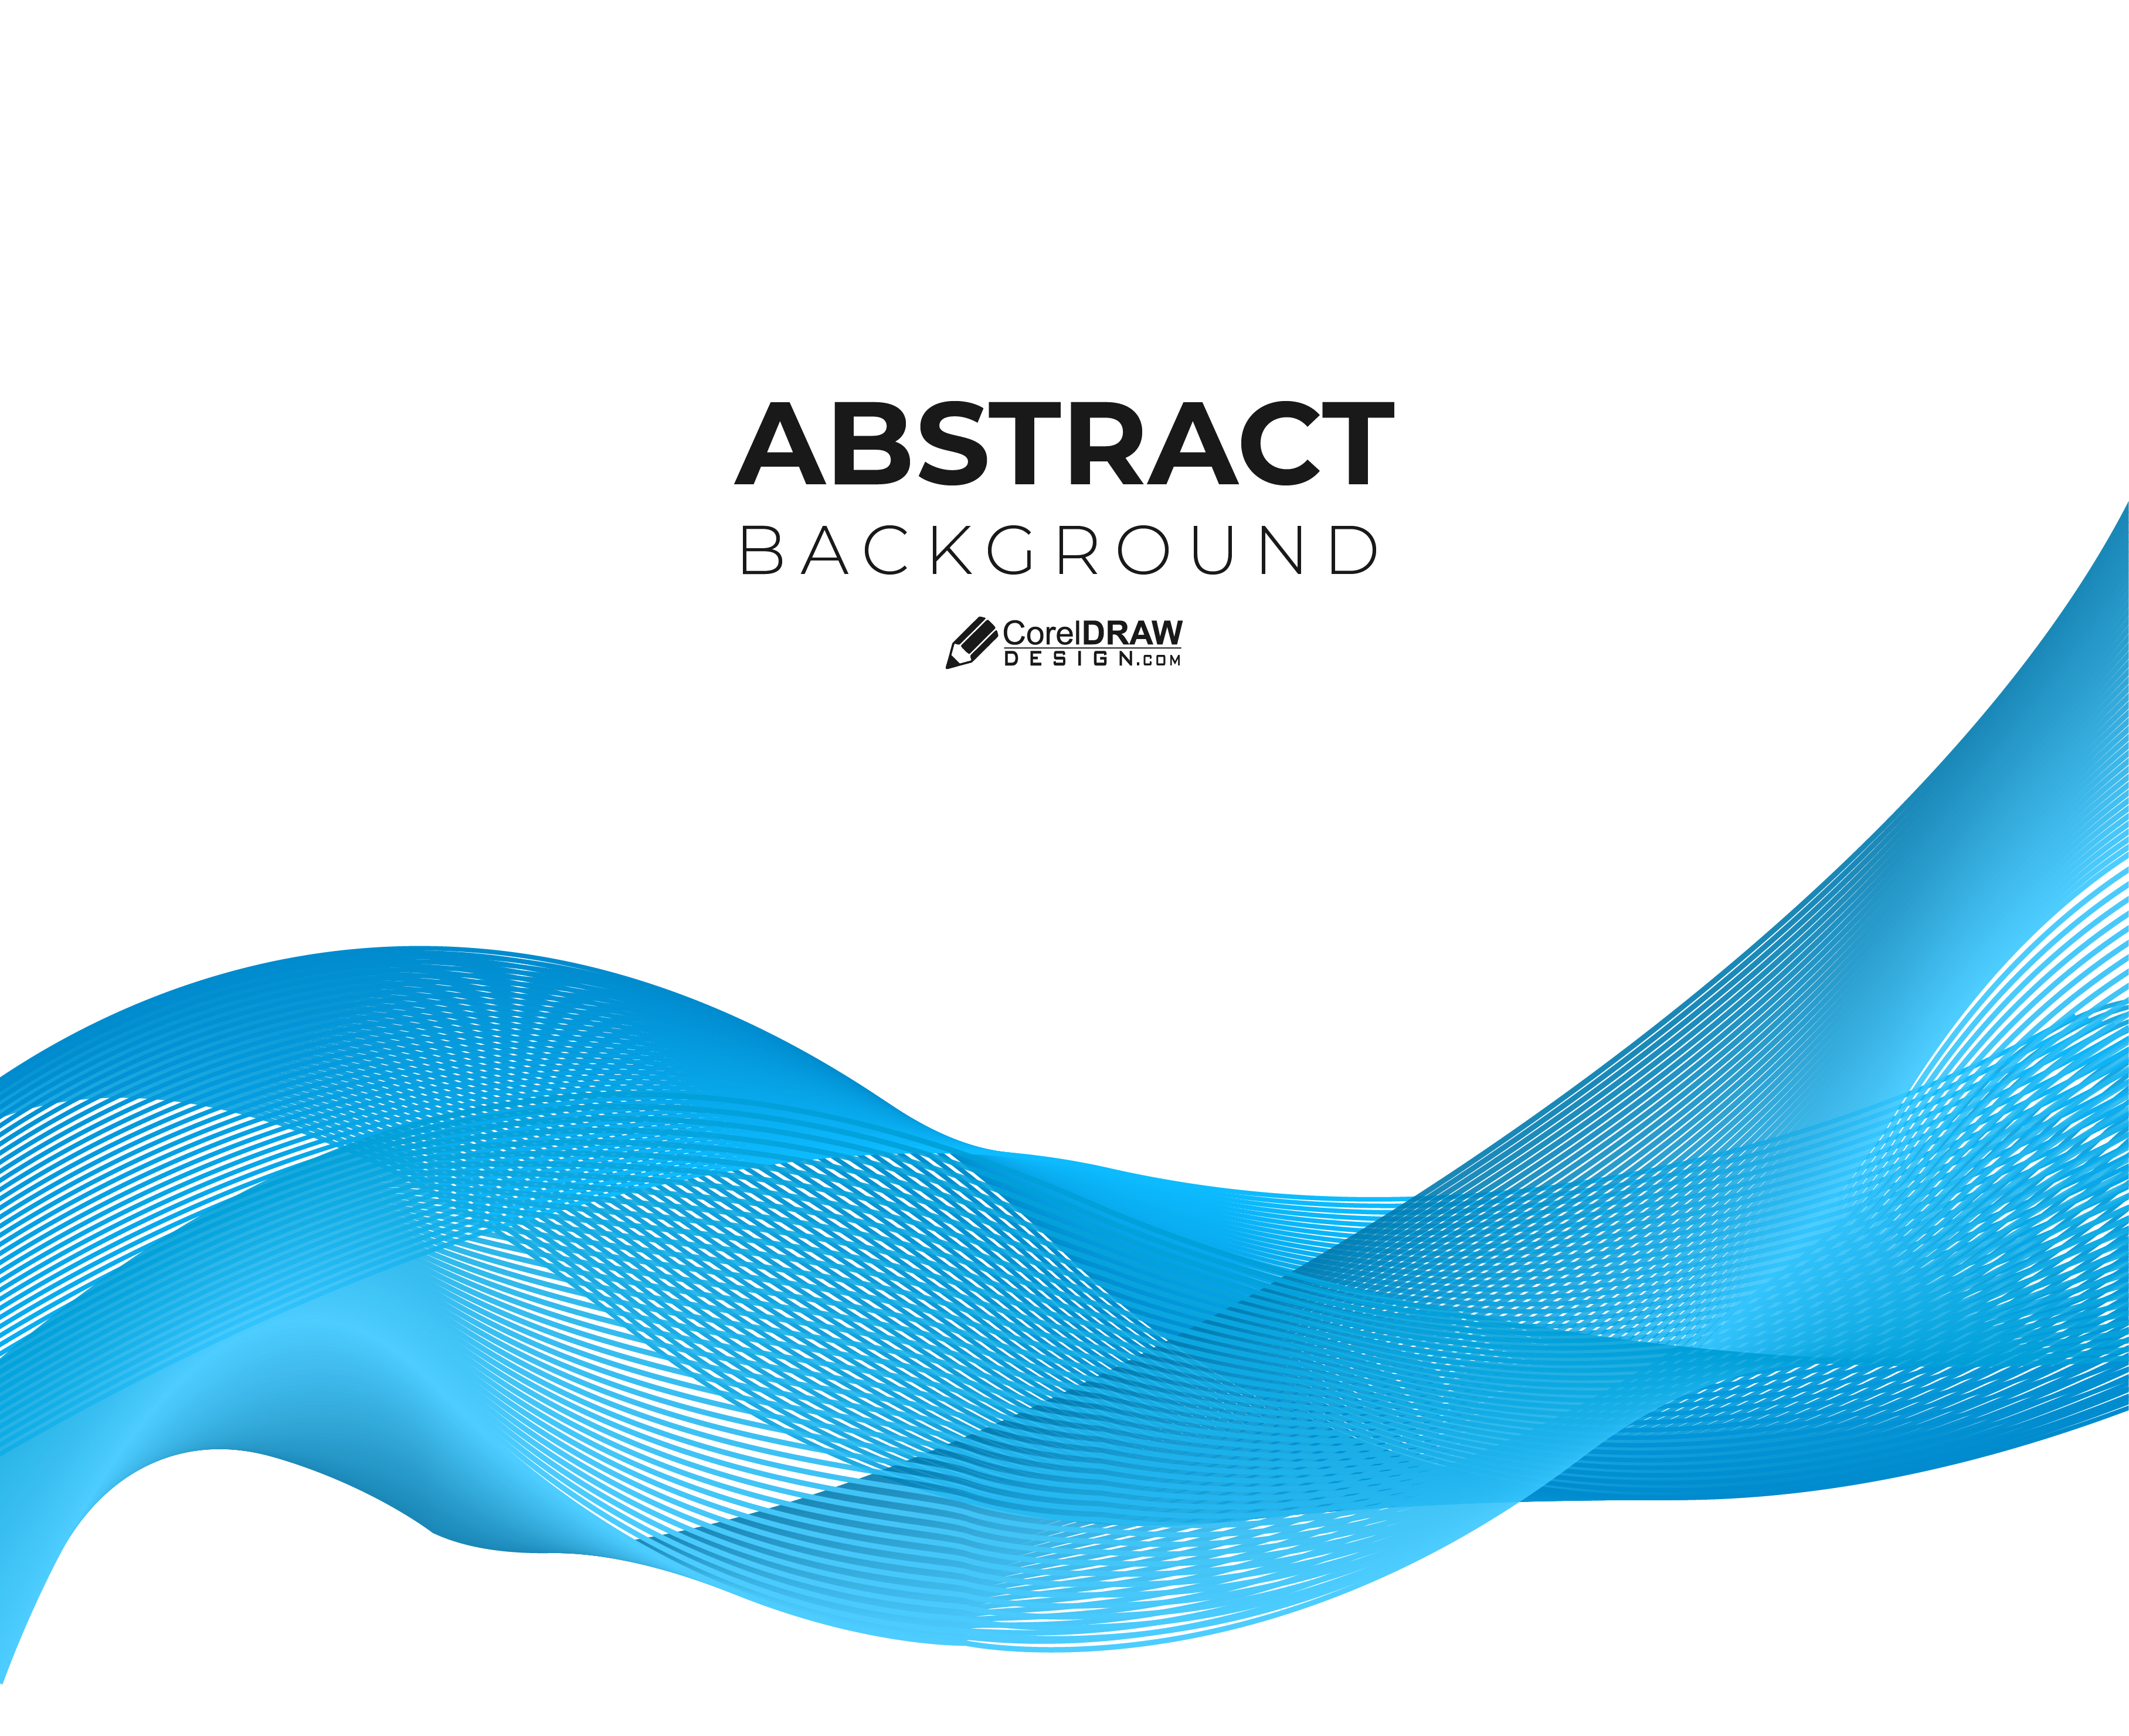 Abstract Premium Trendy Blend Spiral Wave Background